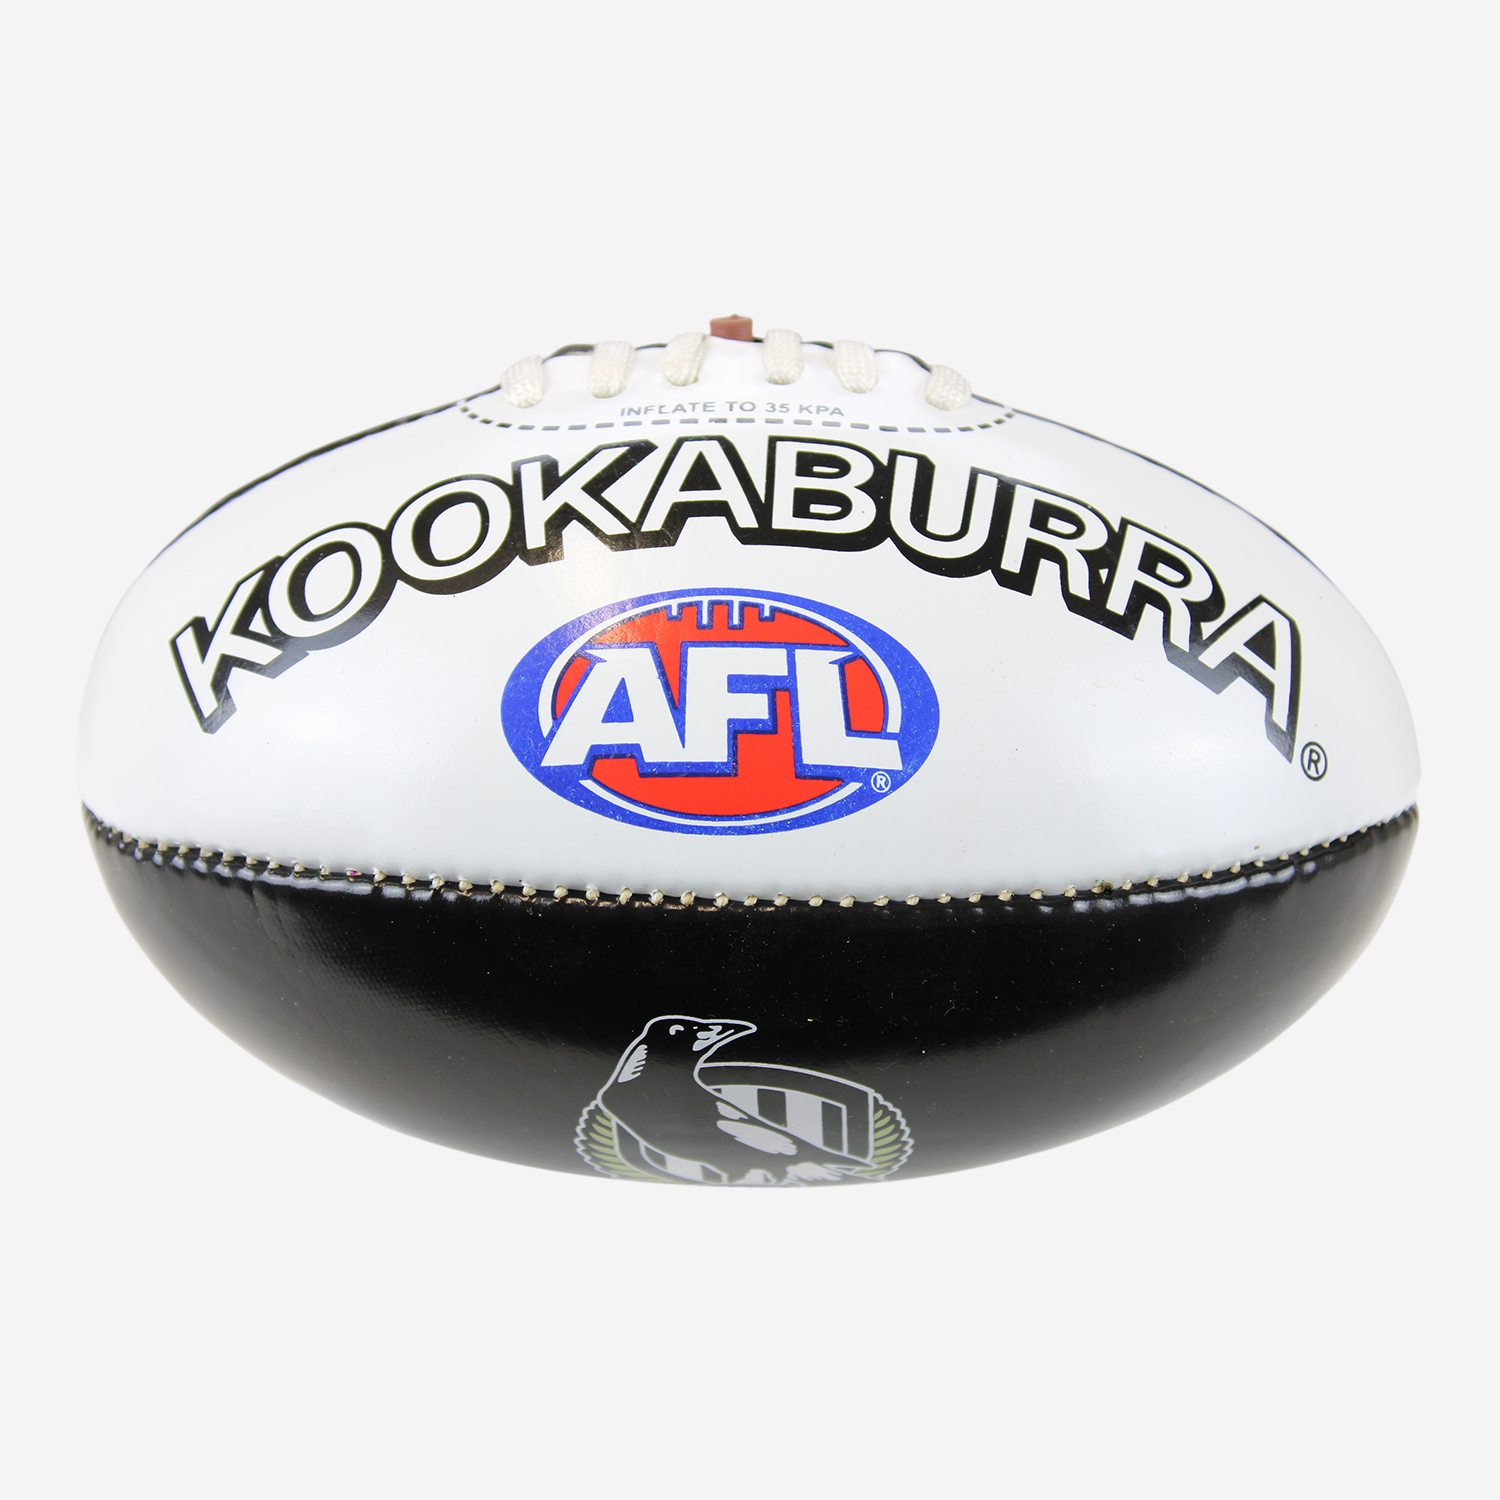 Kookaburra AFL Mini PVC Football 20CM Collingwood Magpies